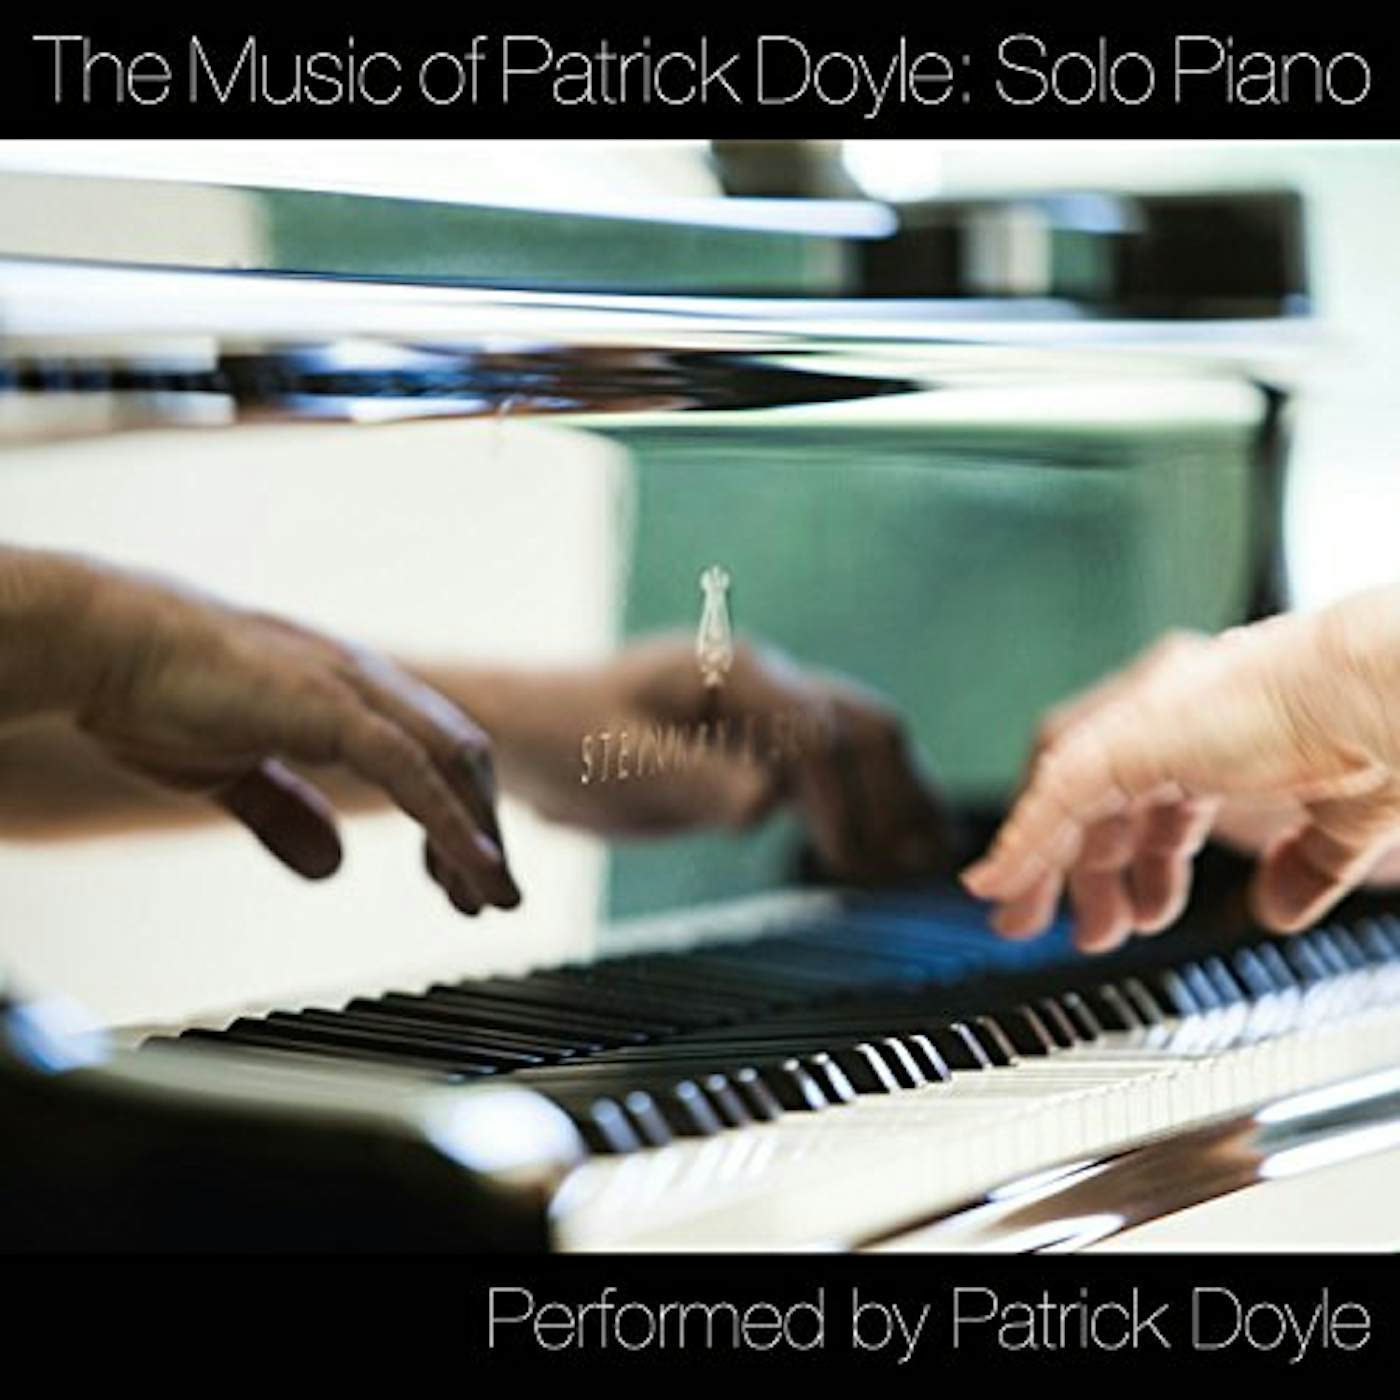 MUSIC OF PATRICK DOYLE: SOLO PIANO CD